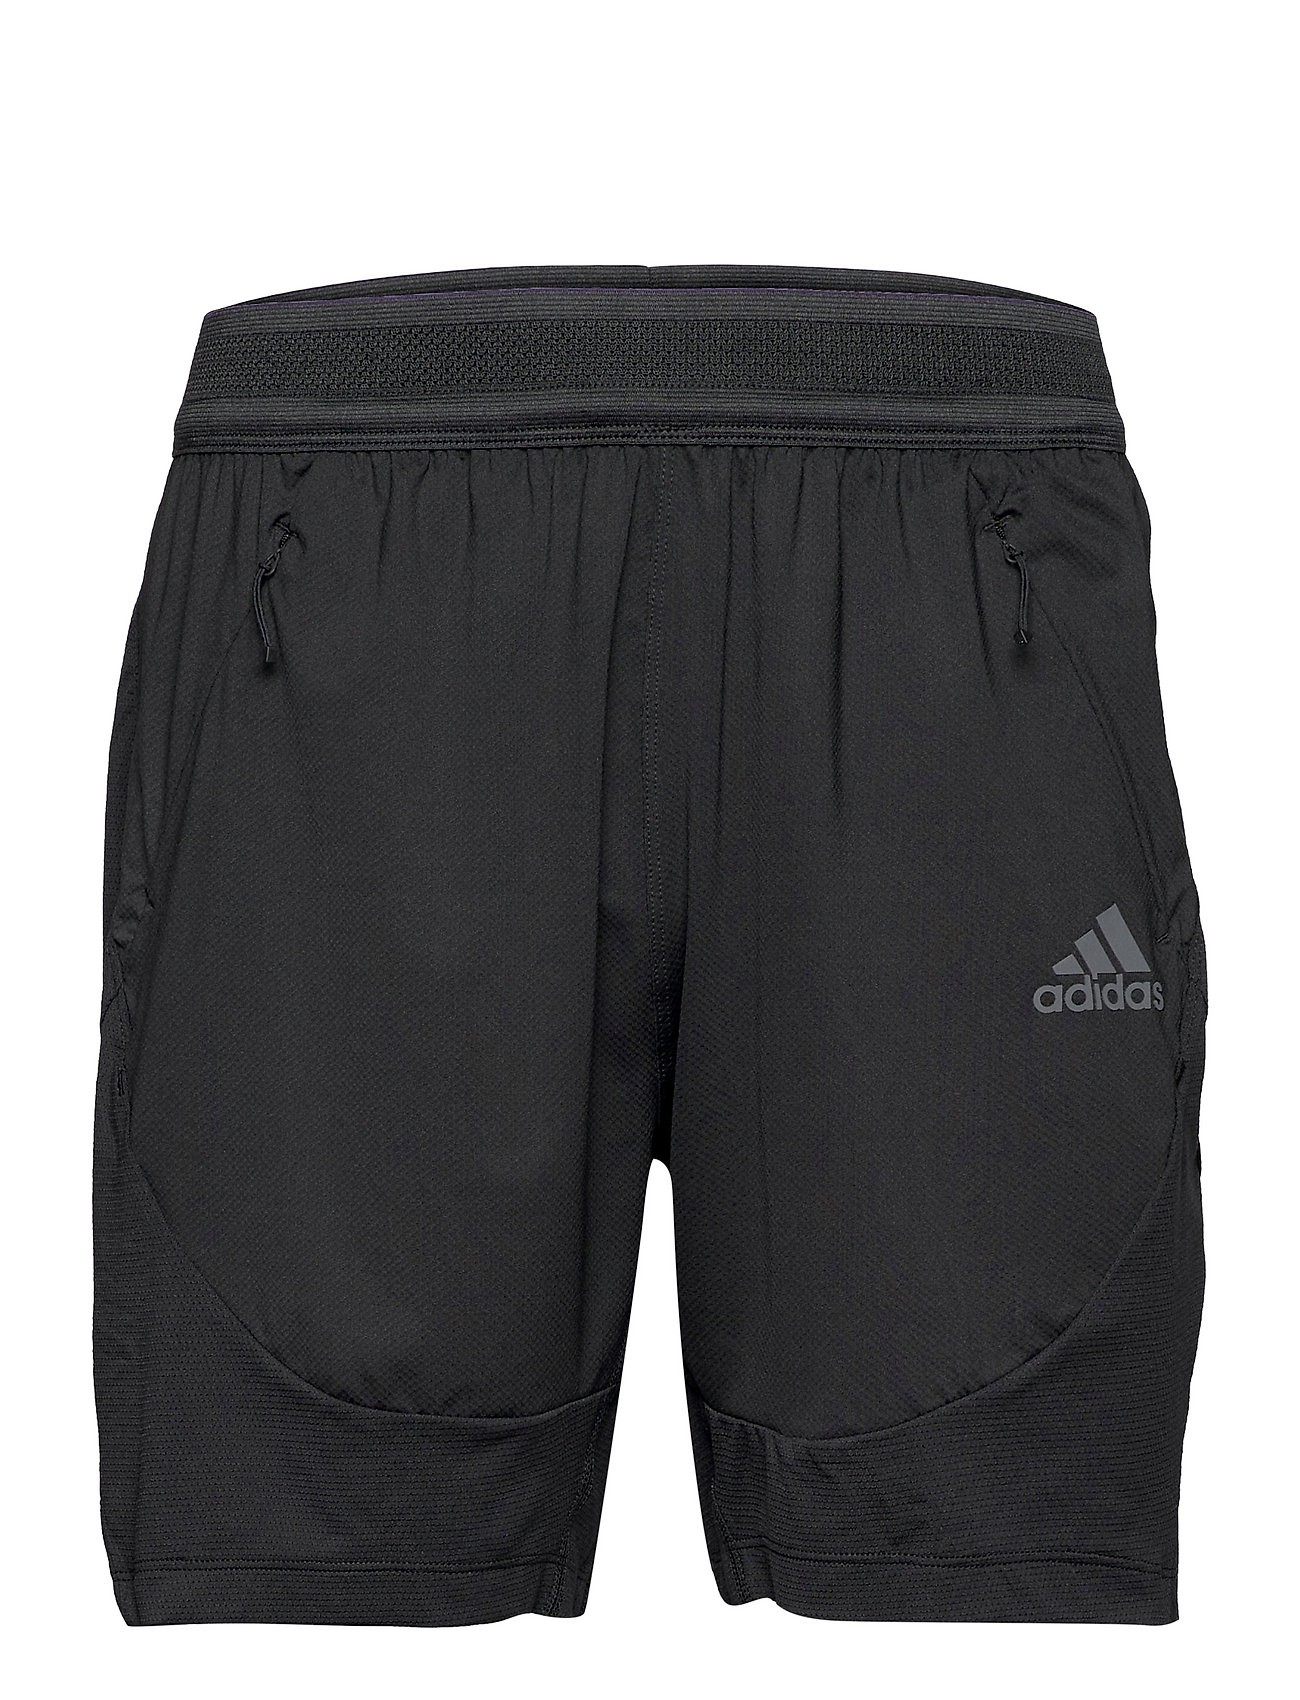 Heat.Rdy Training Shorts Shorts Sport Shorts Musta Adidas Performance, adidas Performance